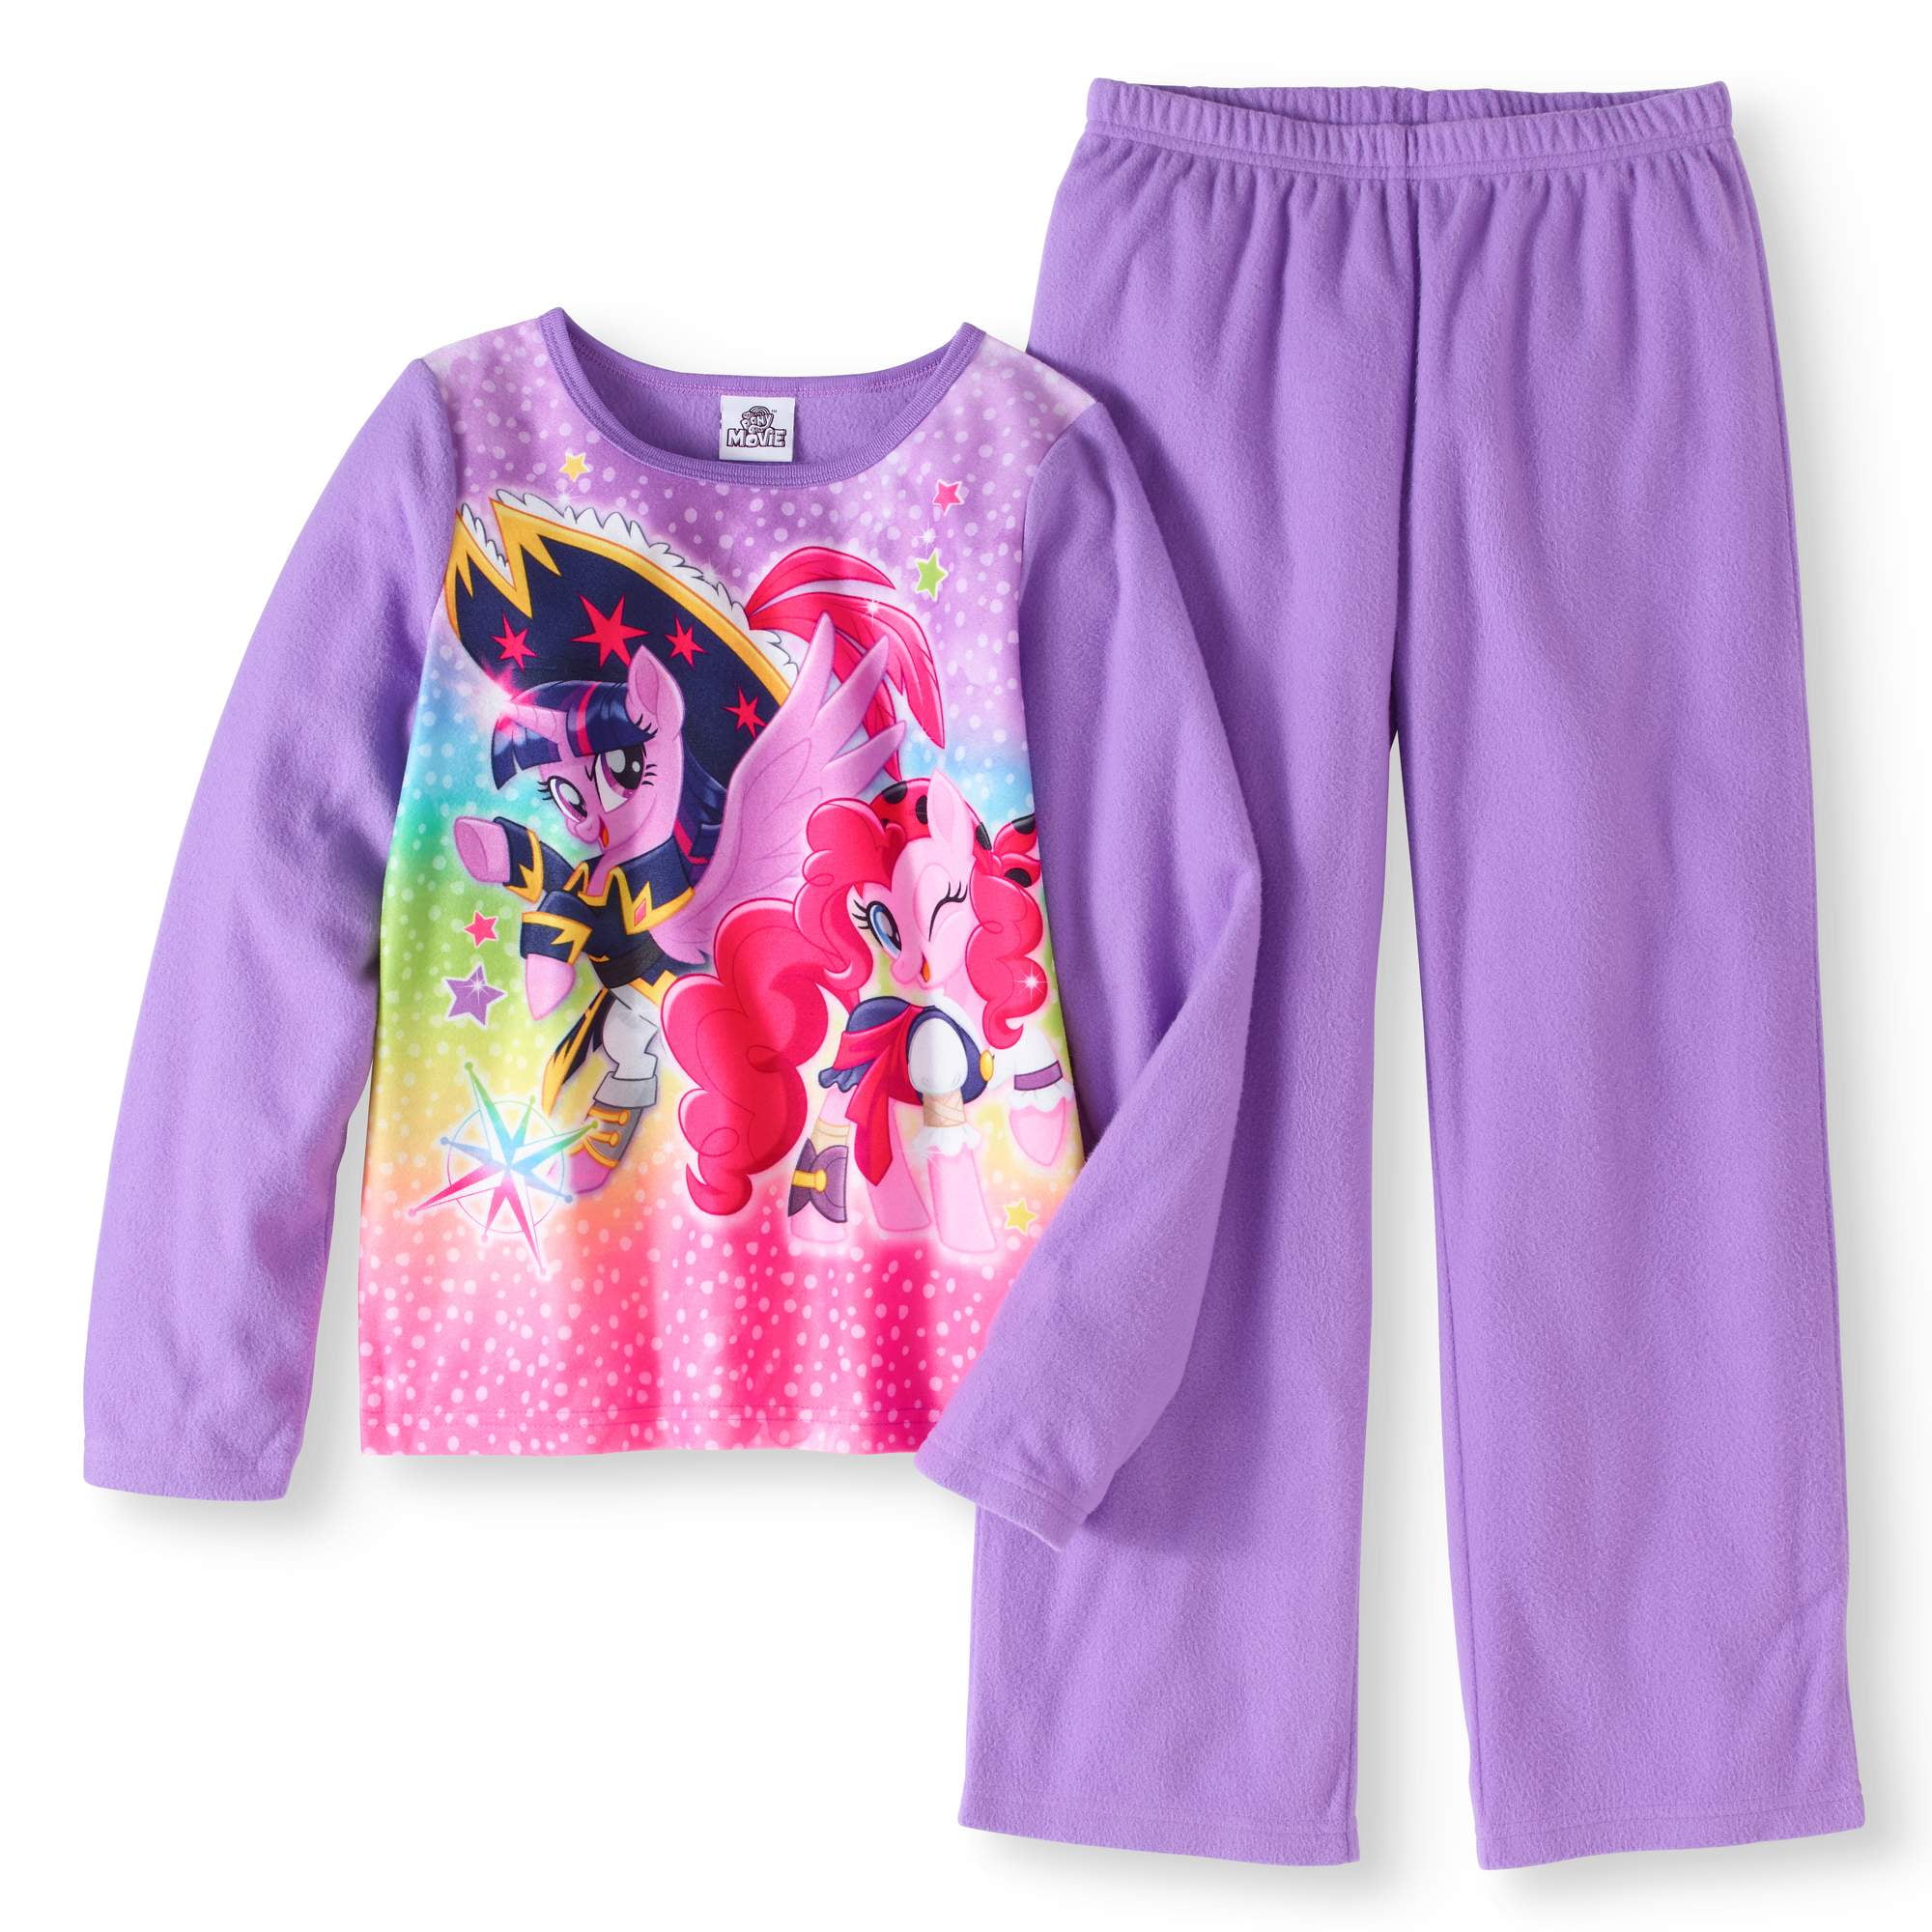 Girls Shortie Pyjamas My Little Pony Short Pjs Size 3-10 Years